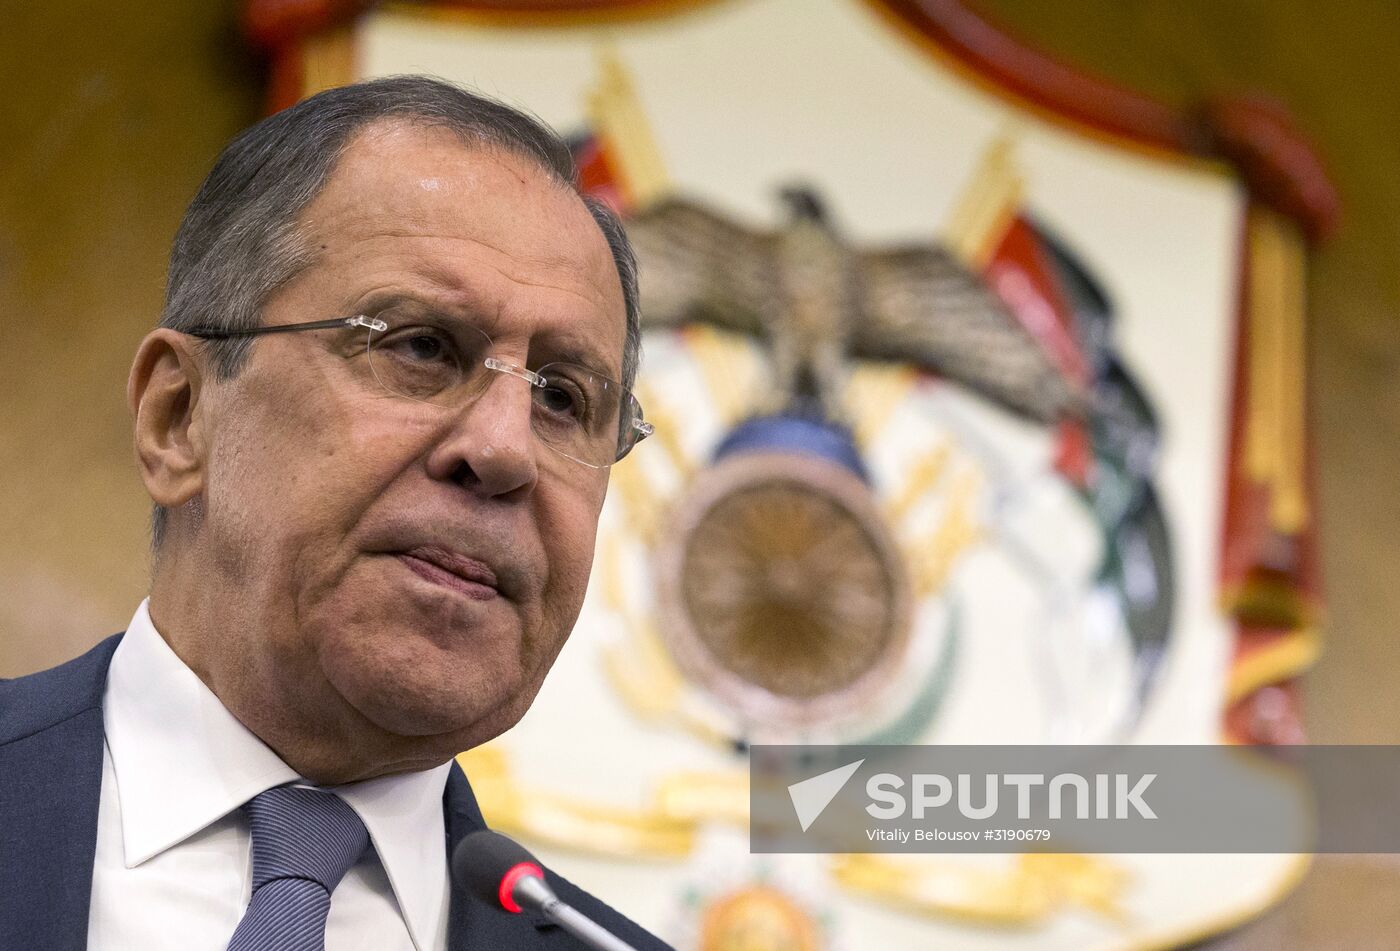 Russian Foreign Minister Sergei Lavrov visits Jordan